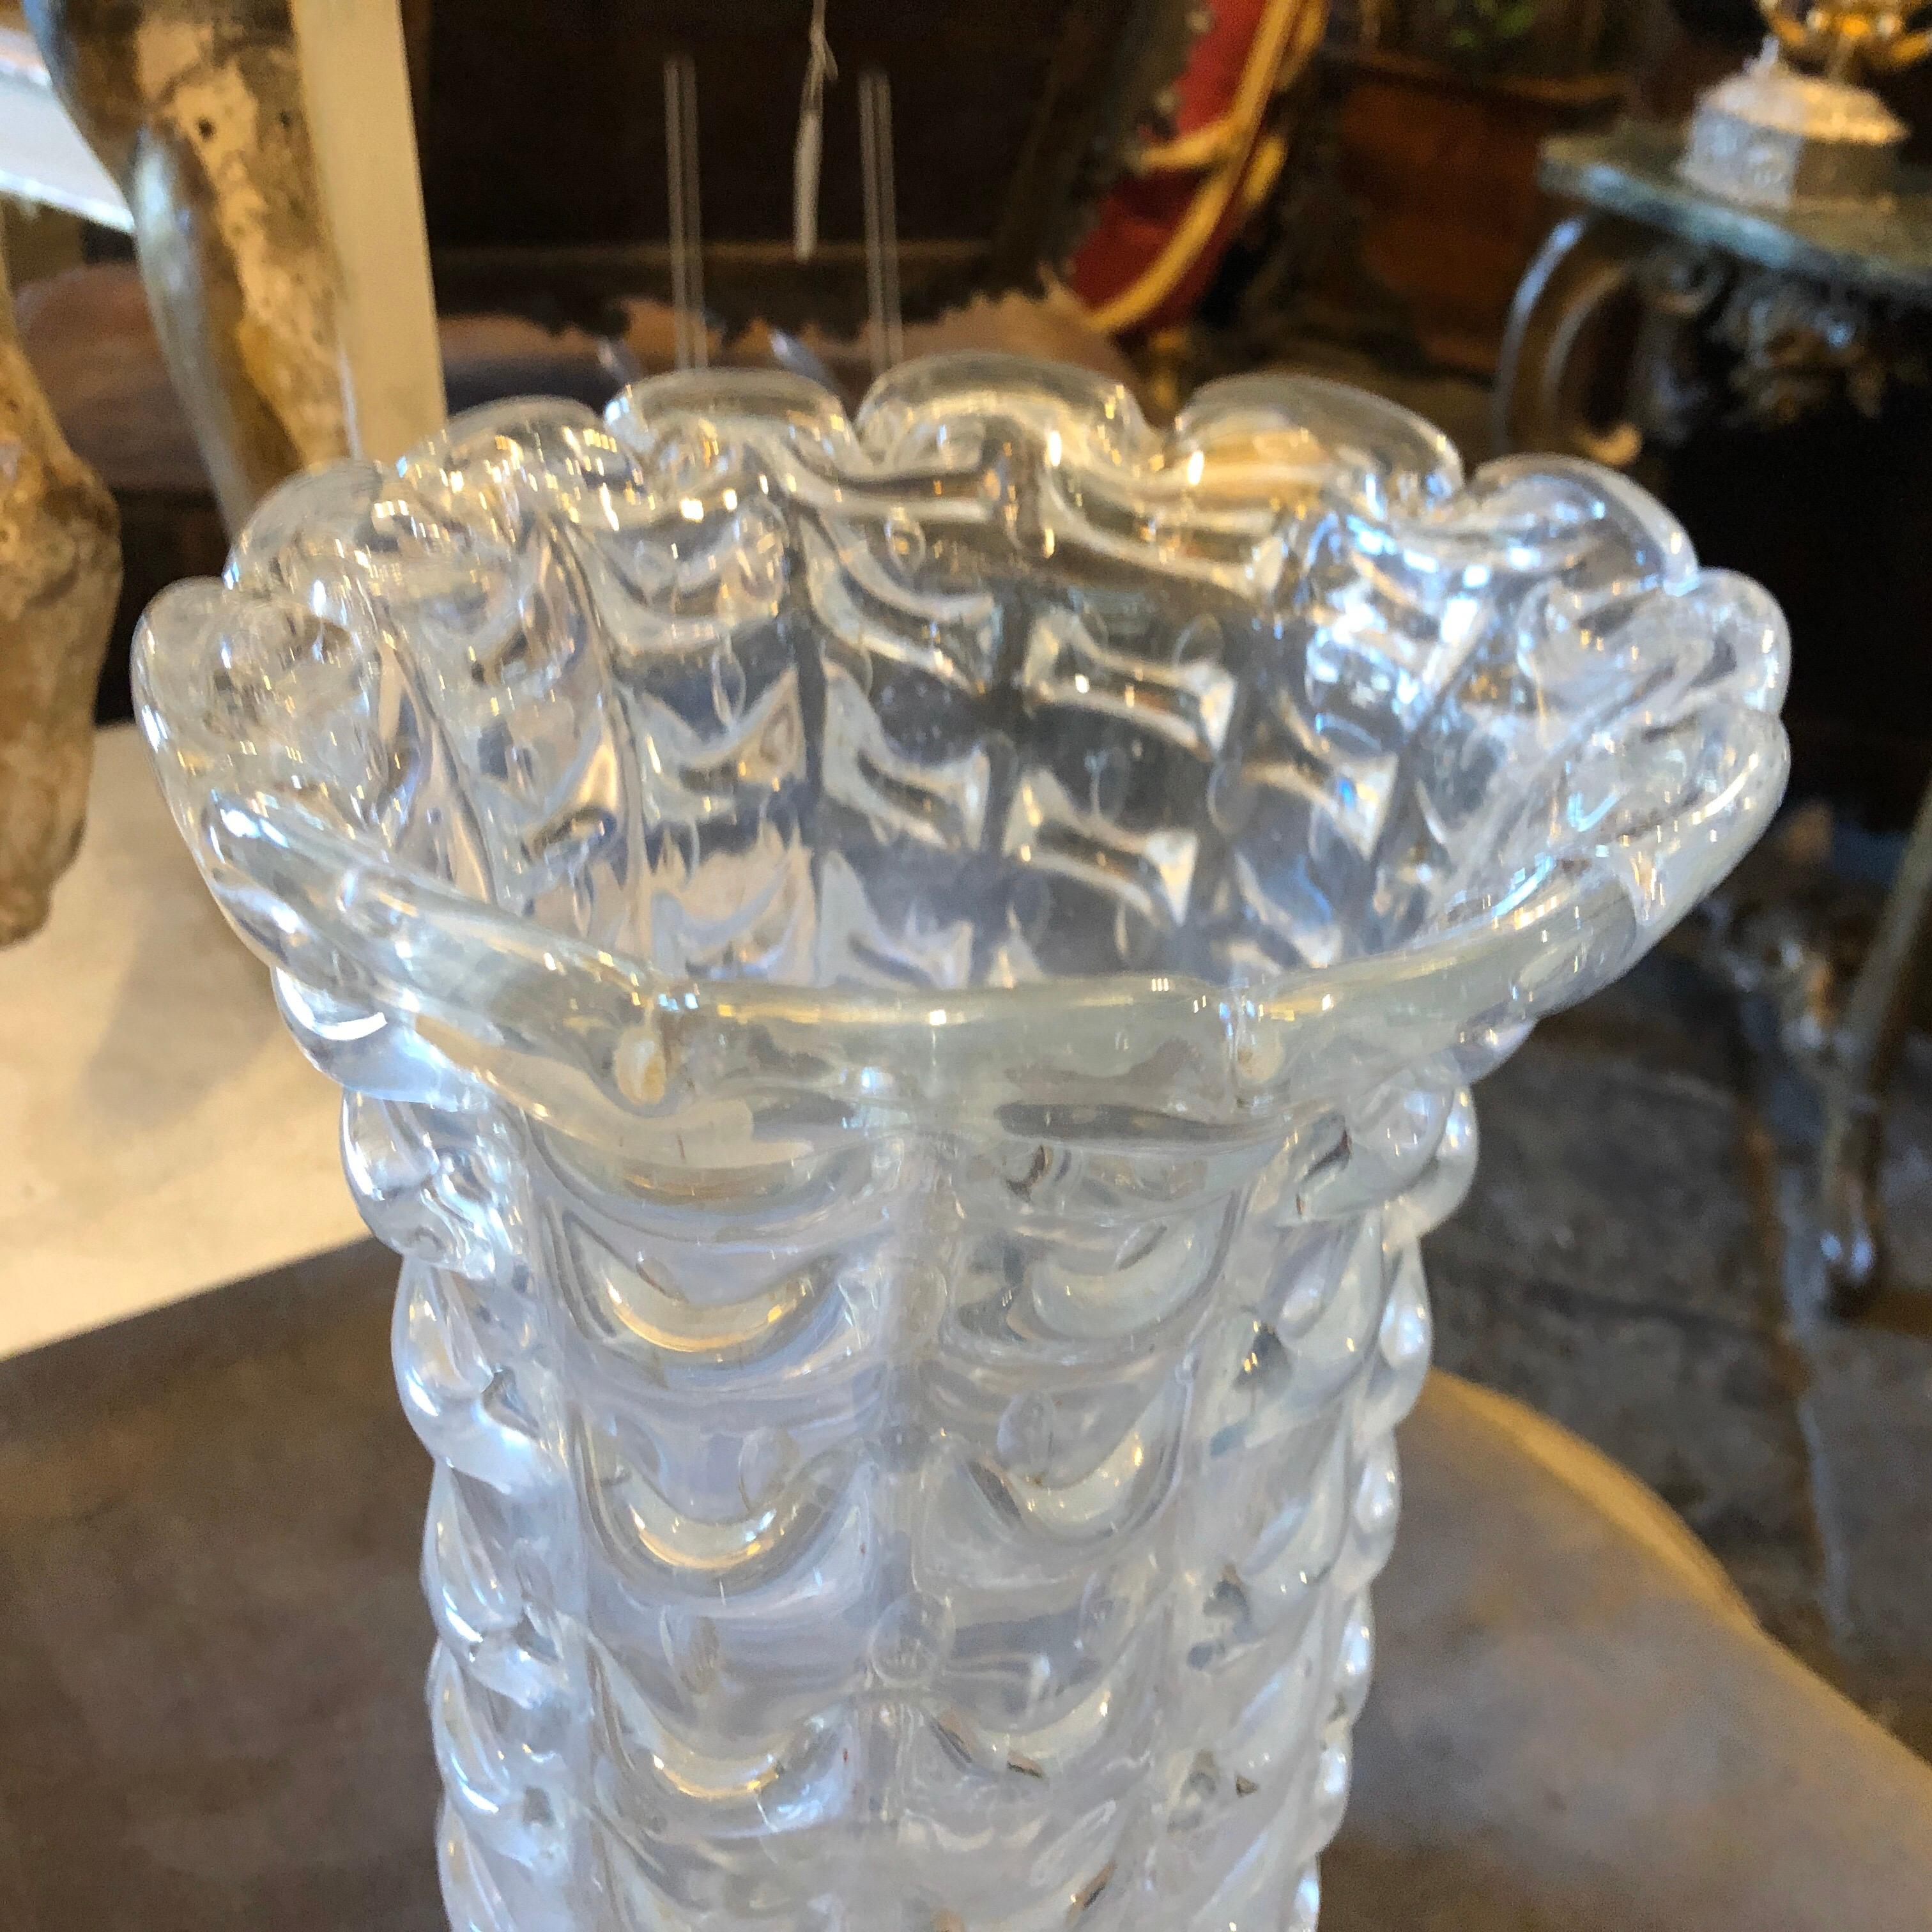 murano glass vase made in italy